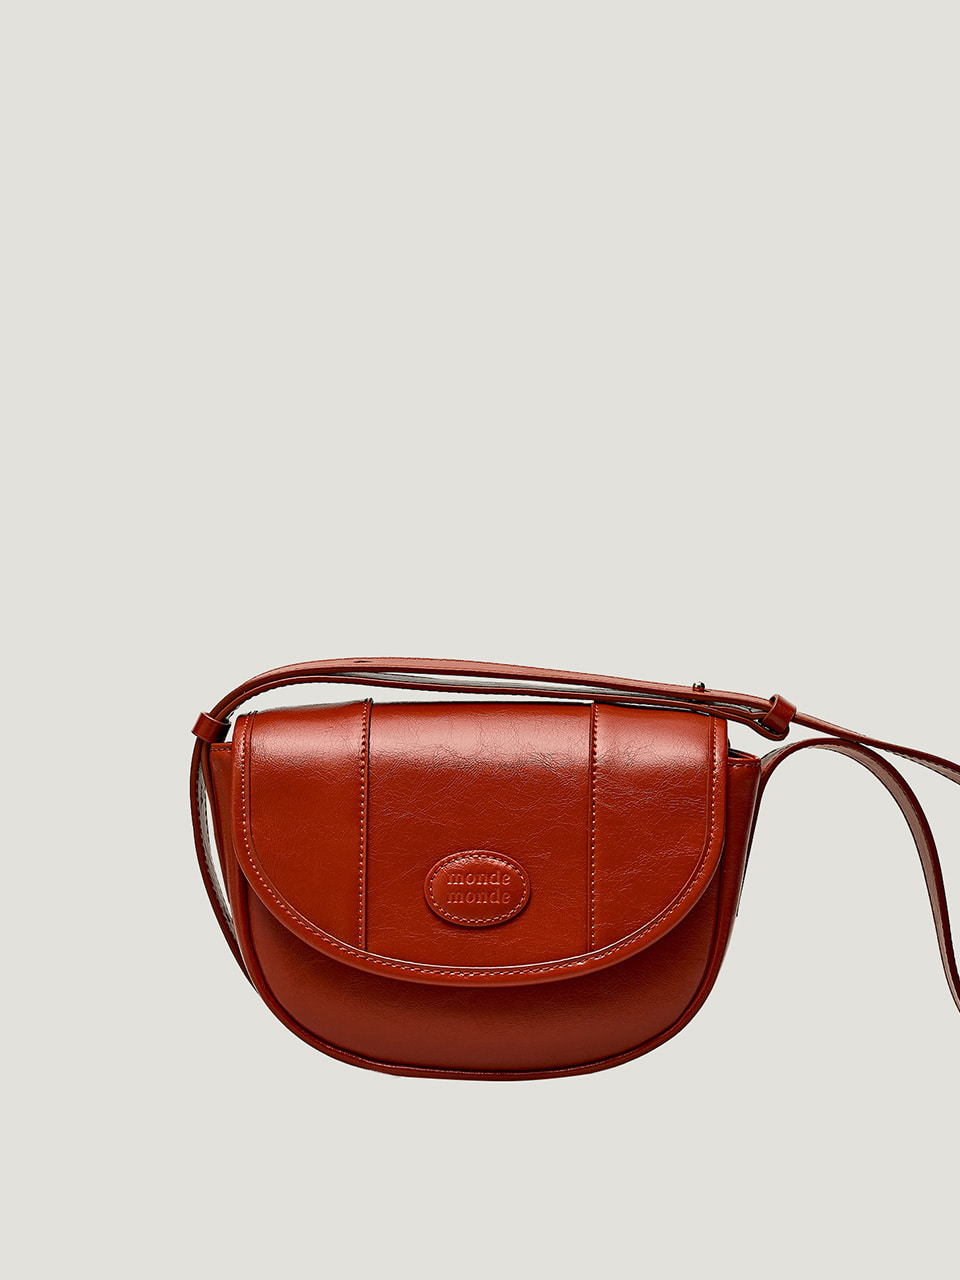 Classic Leather Half Moon mini Bag red orange